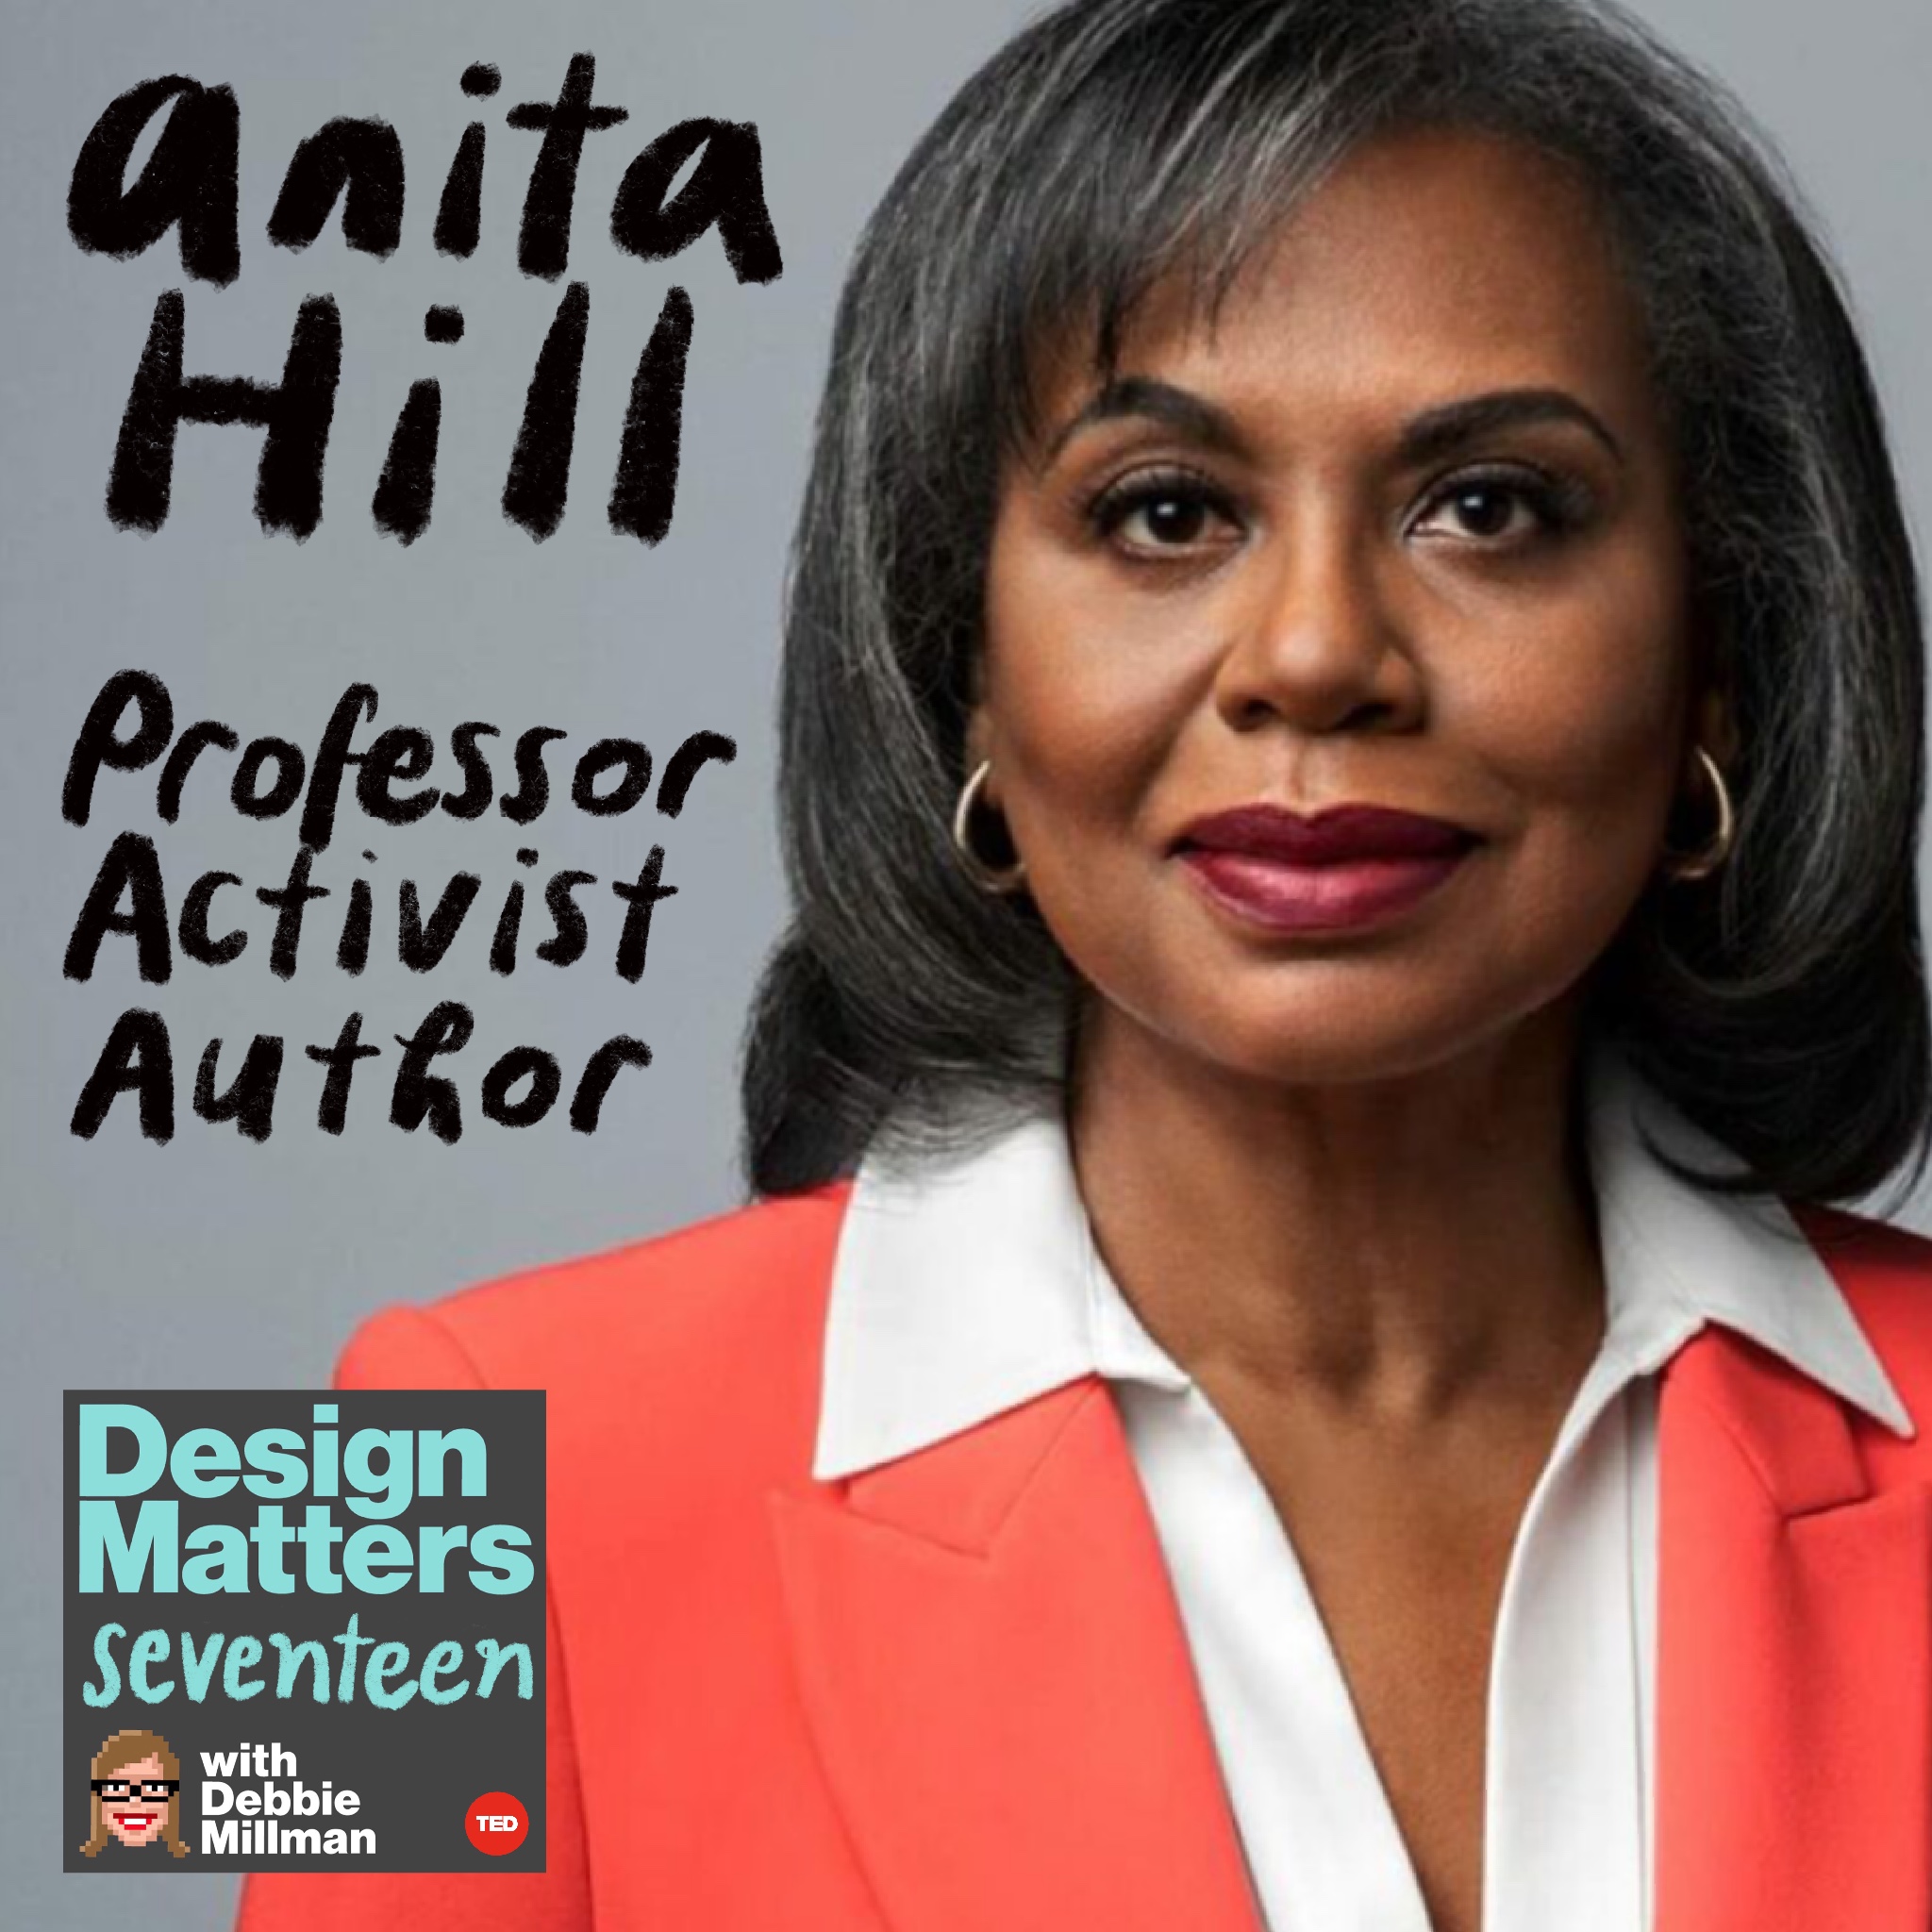 Thumbnail for "Anita Hill".